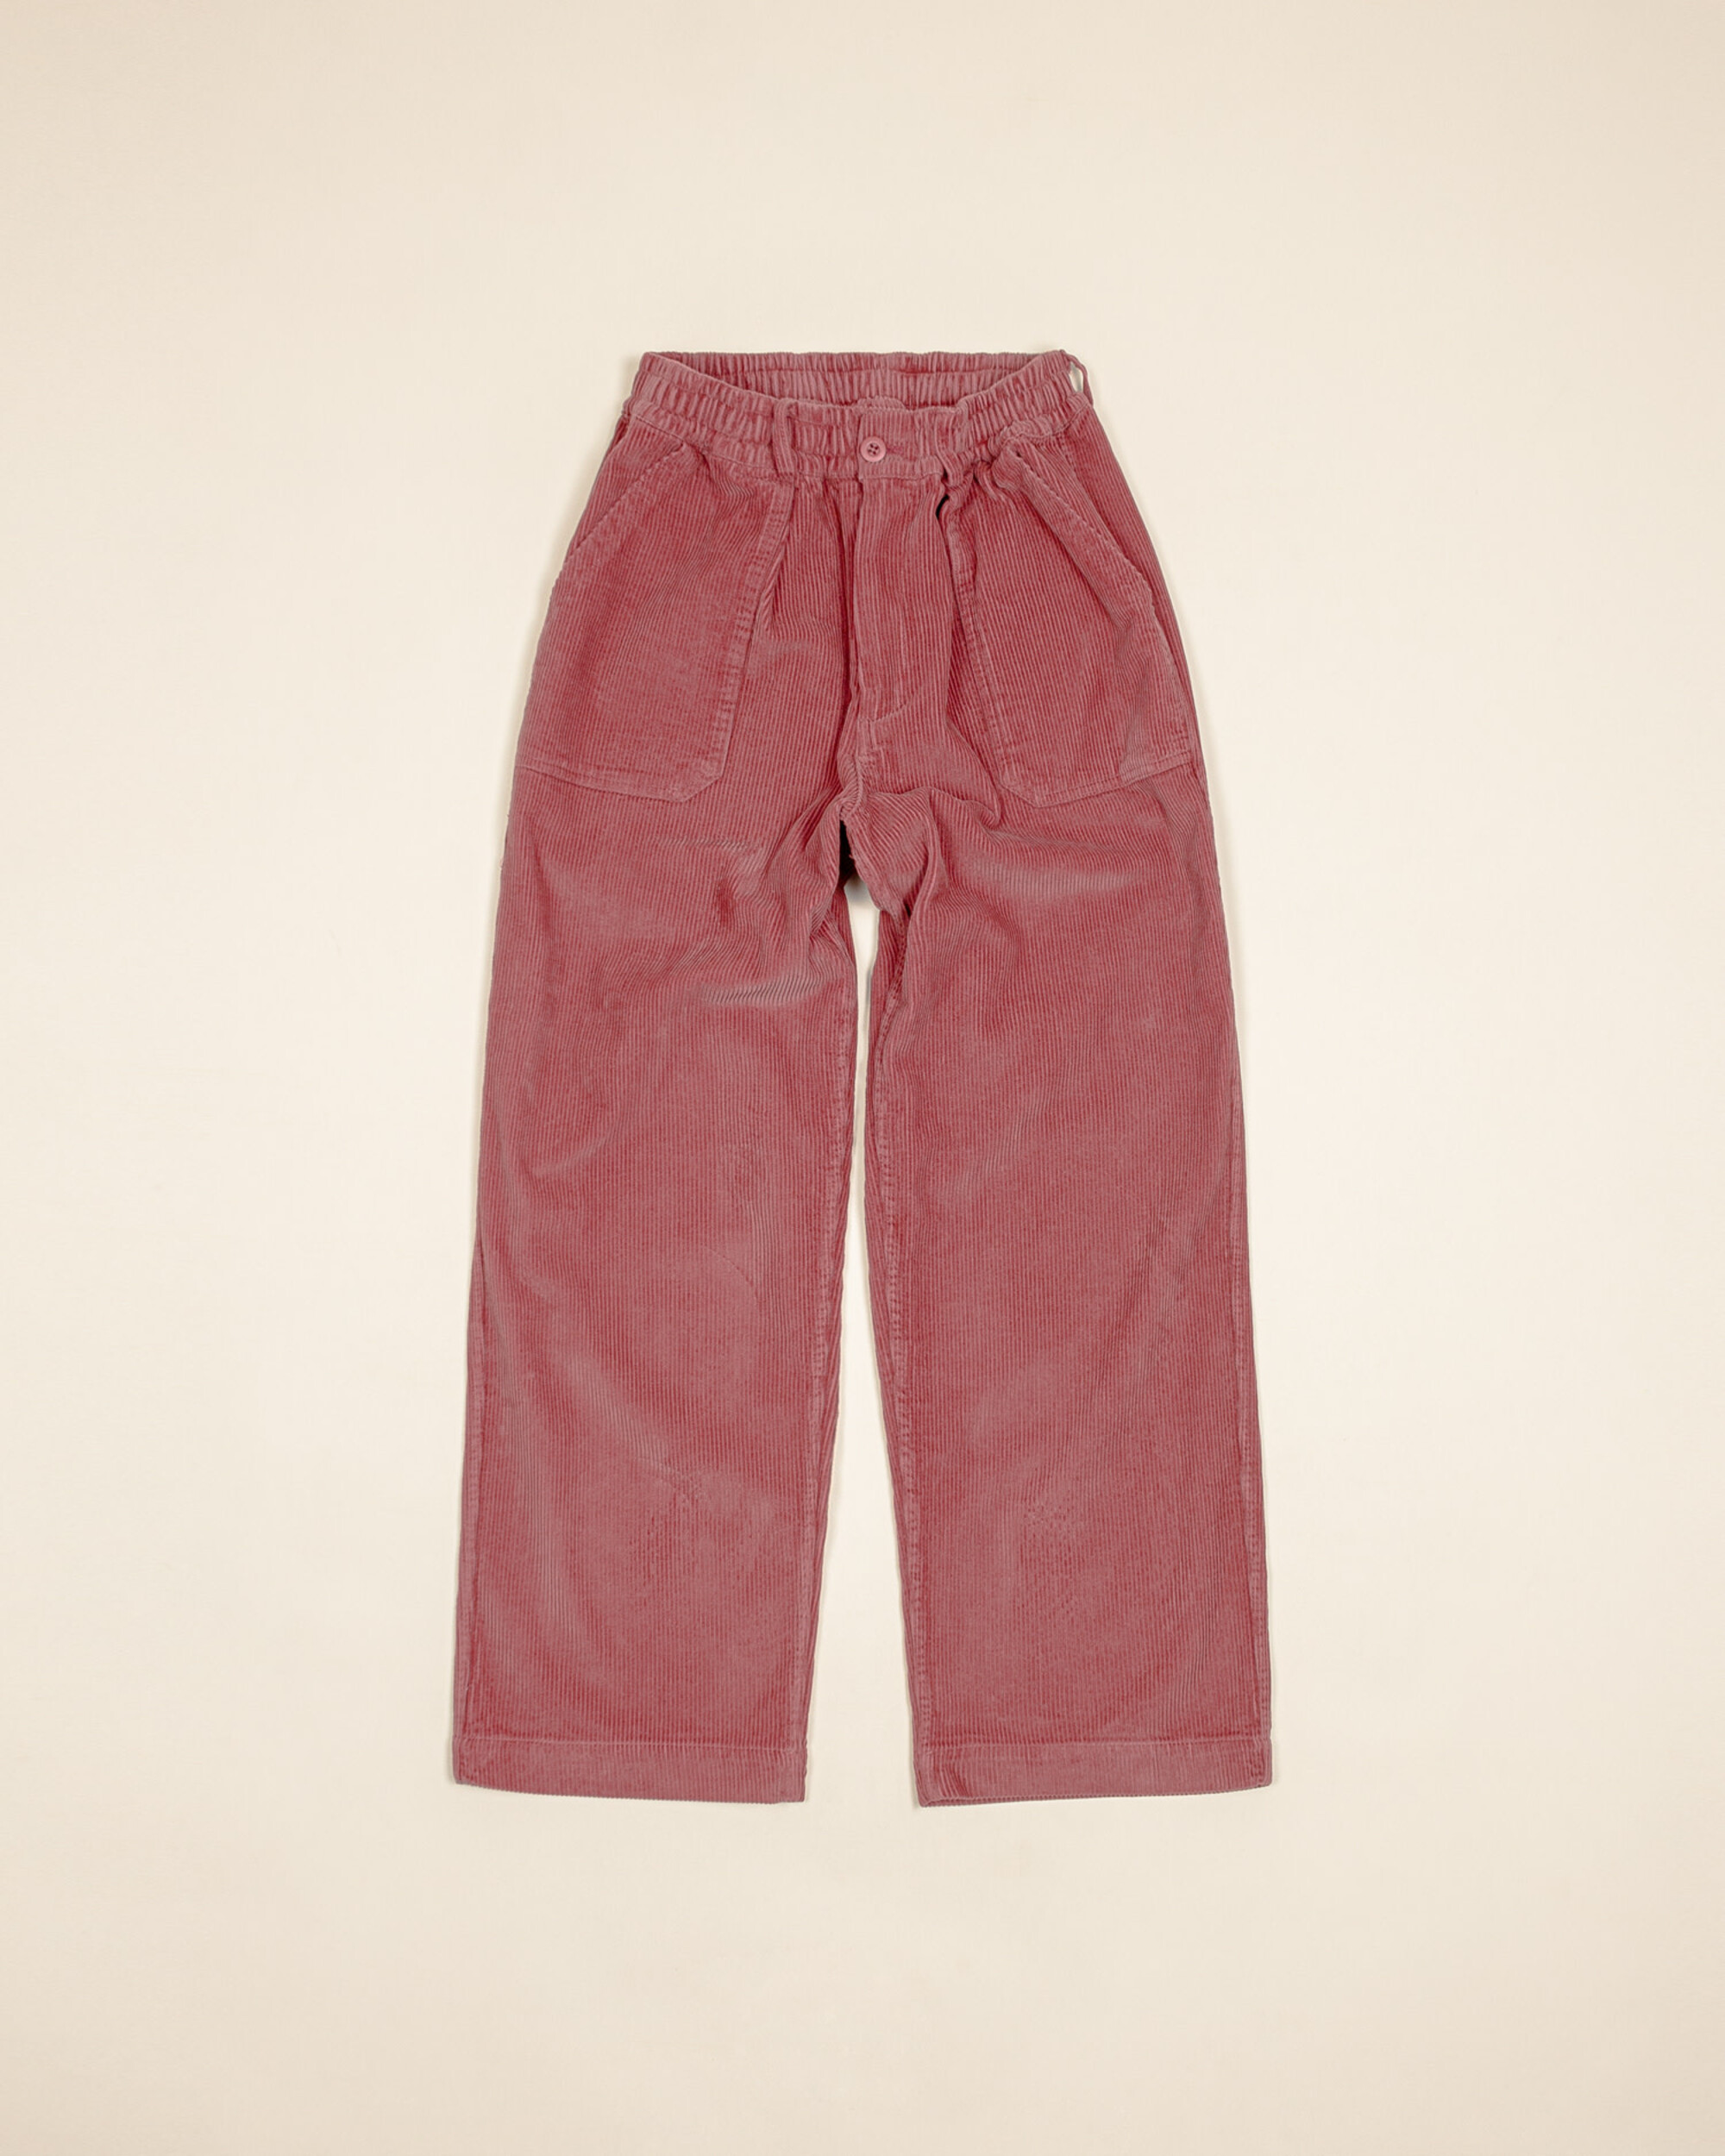 Kappy One Tuck Fatigue Corduroy Pants - Vintage Pink